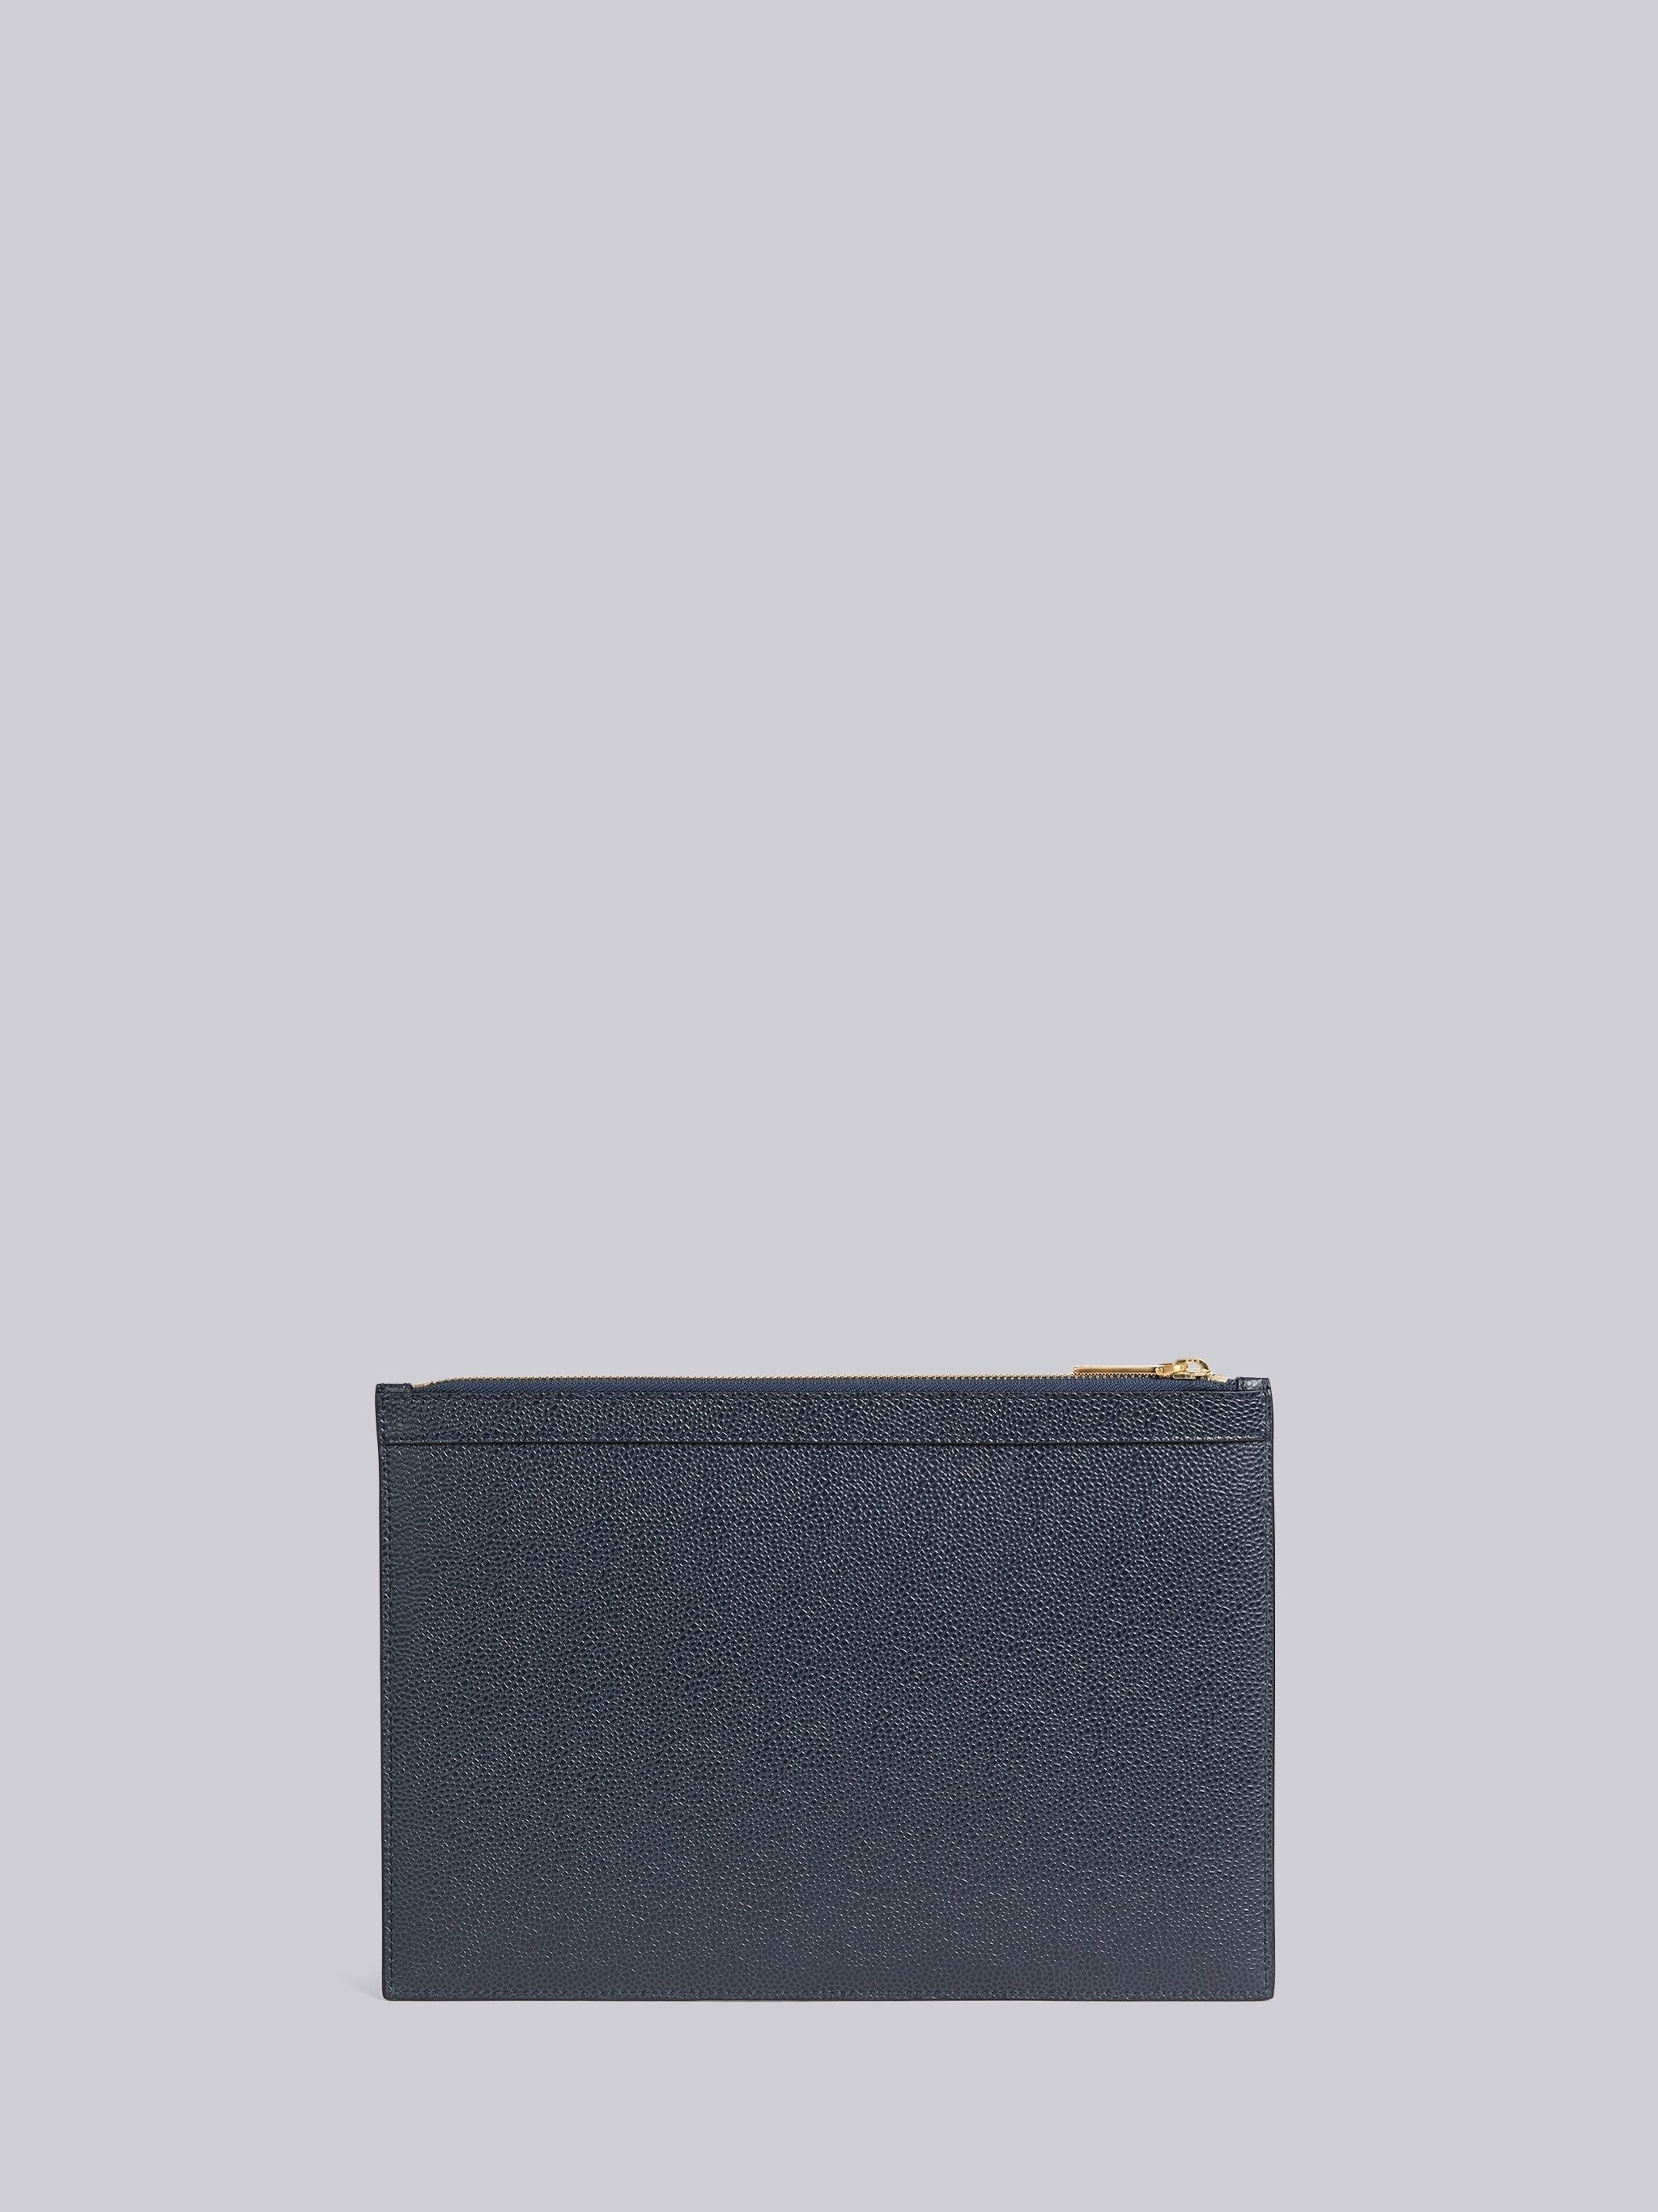 Pebble Grain Leather 4-Bar Small Document Holder - 3